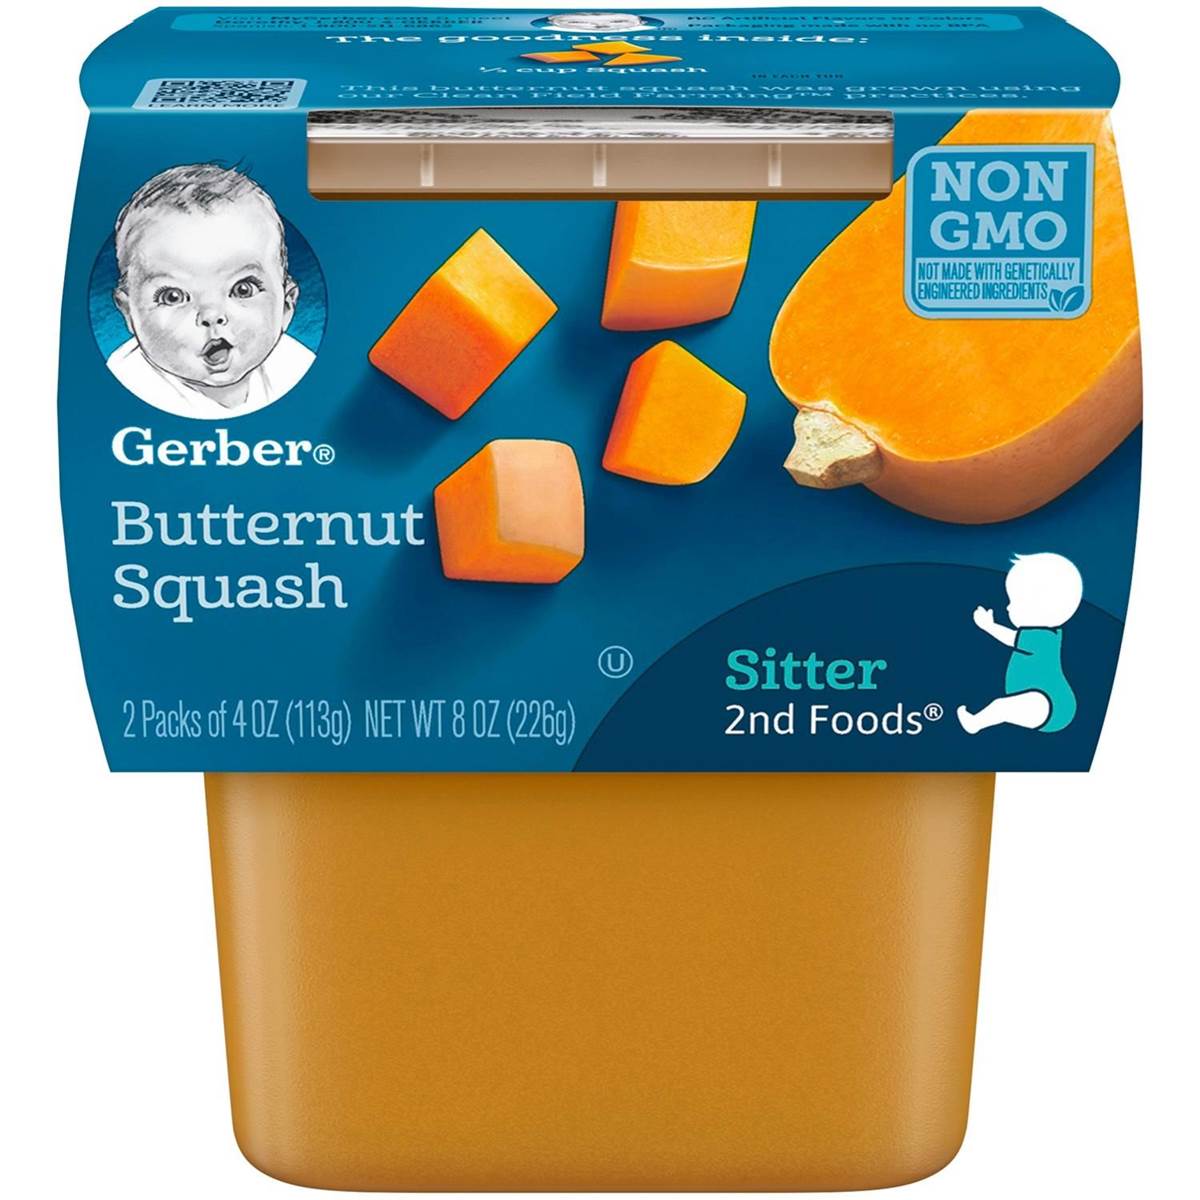 Gerber 2nd Foods for Sitter - Butternut Squash